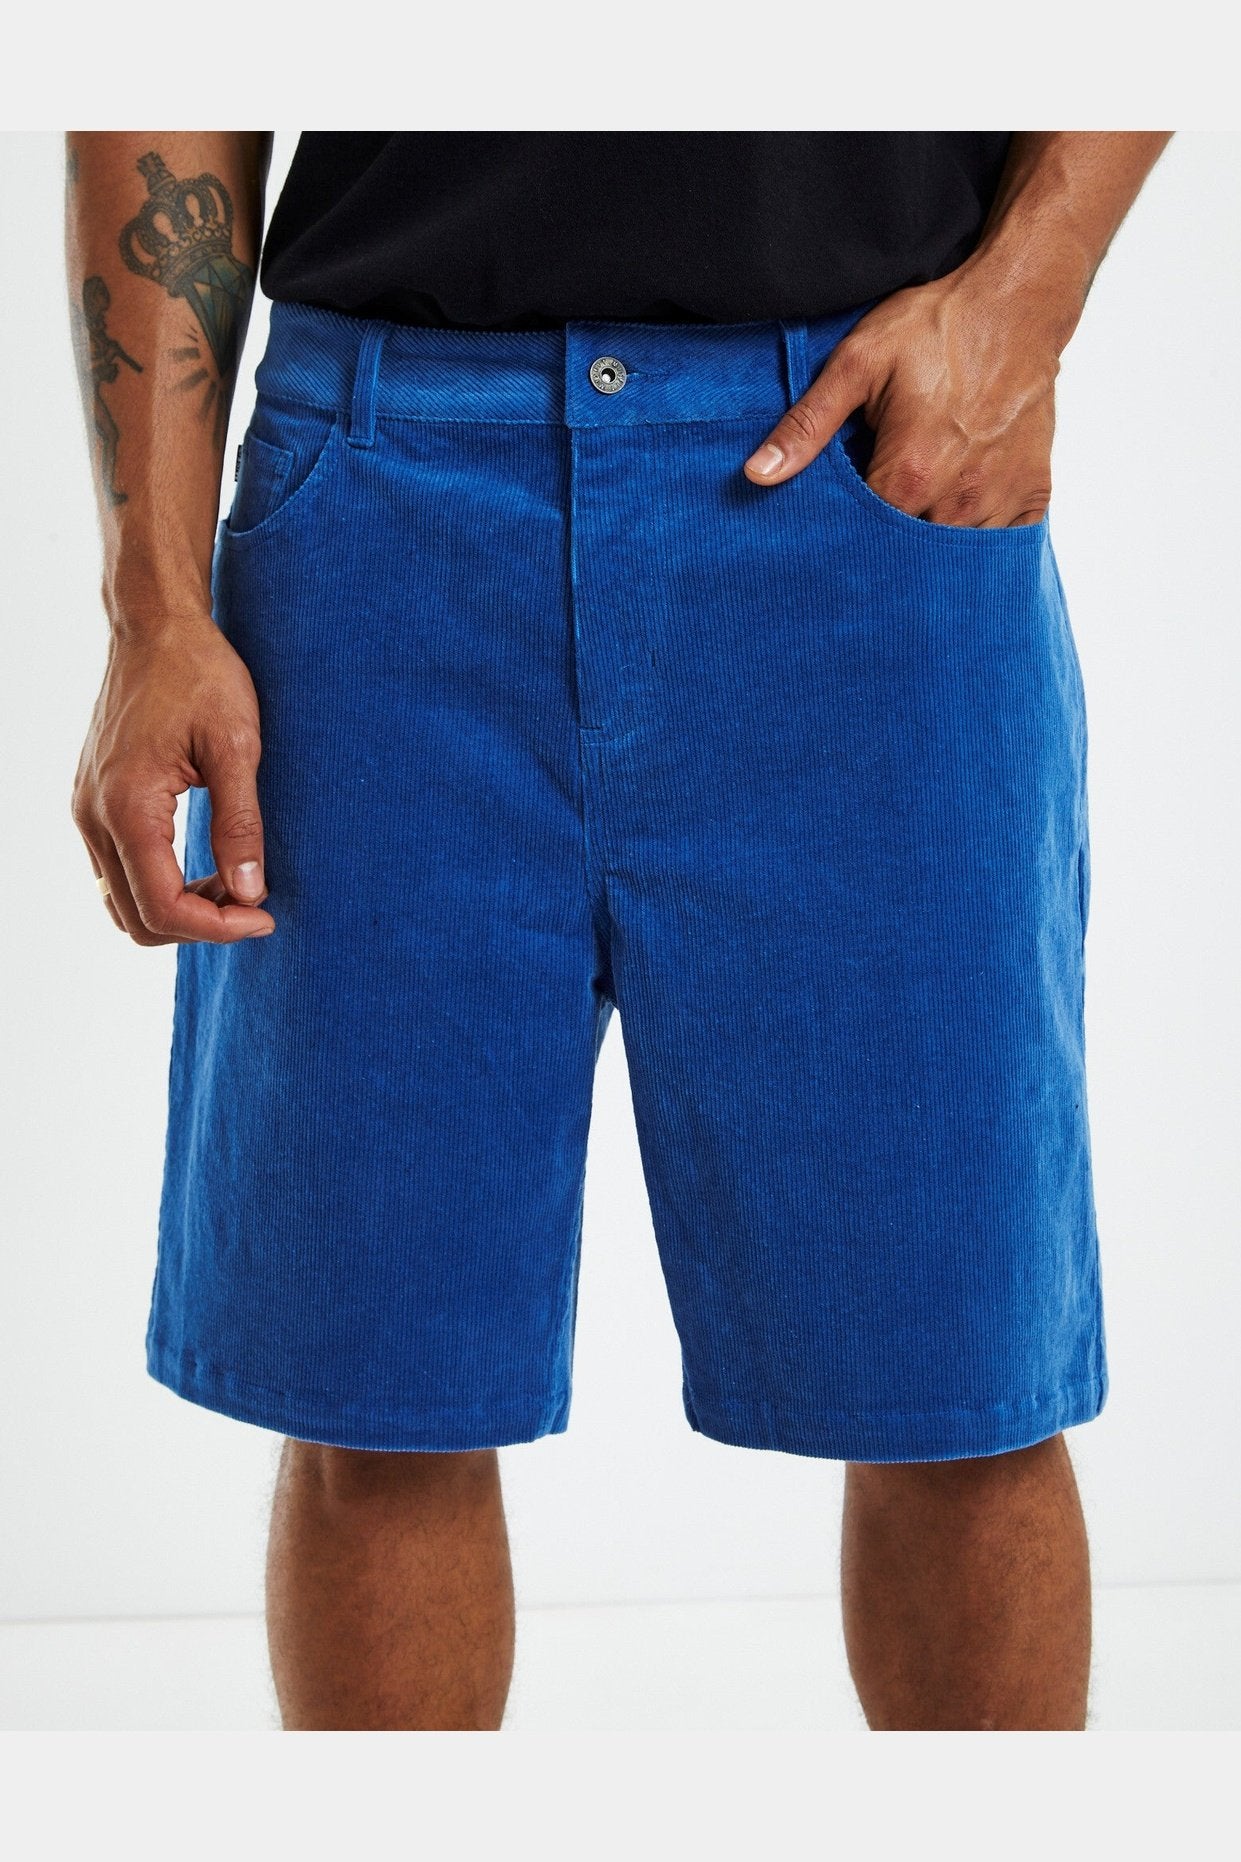 Misfit cord shorts - blue